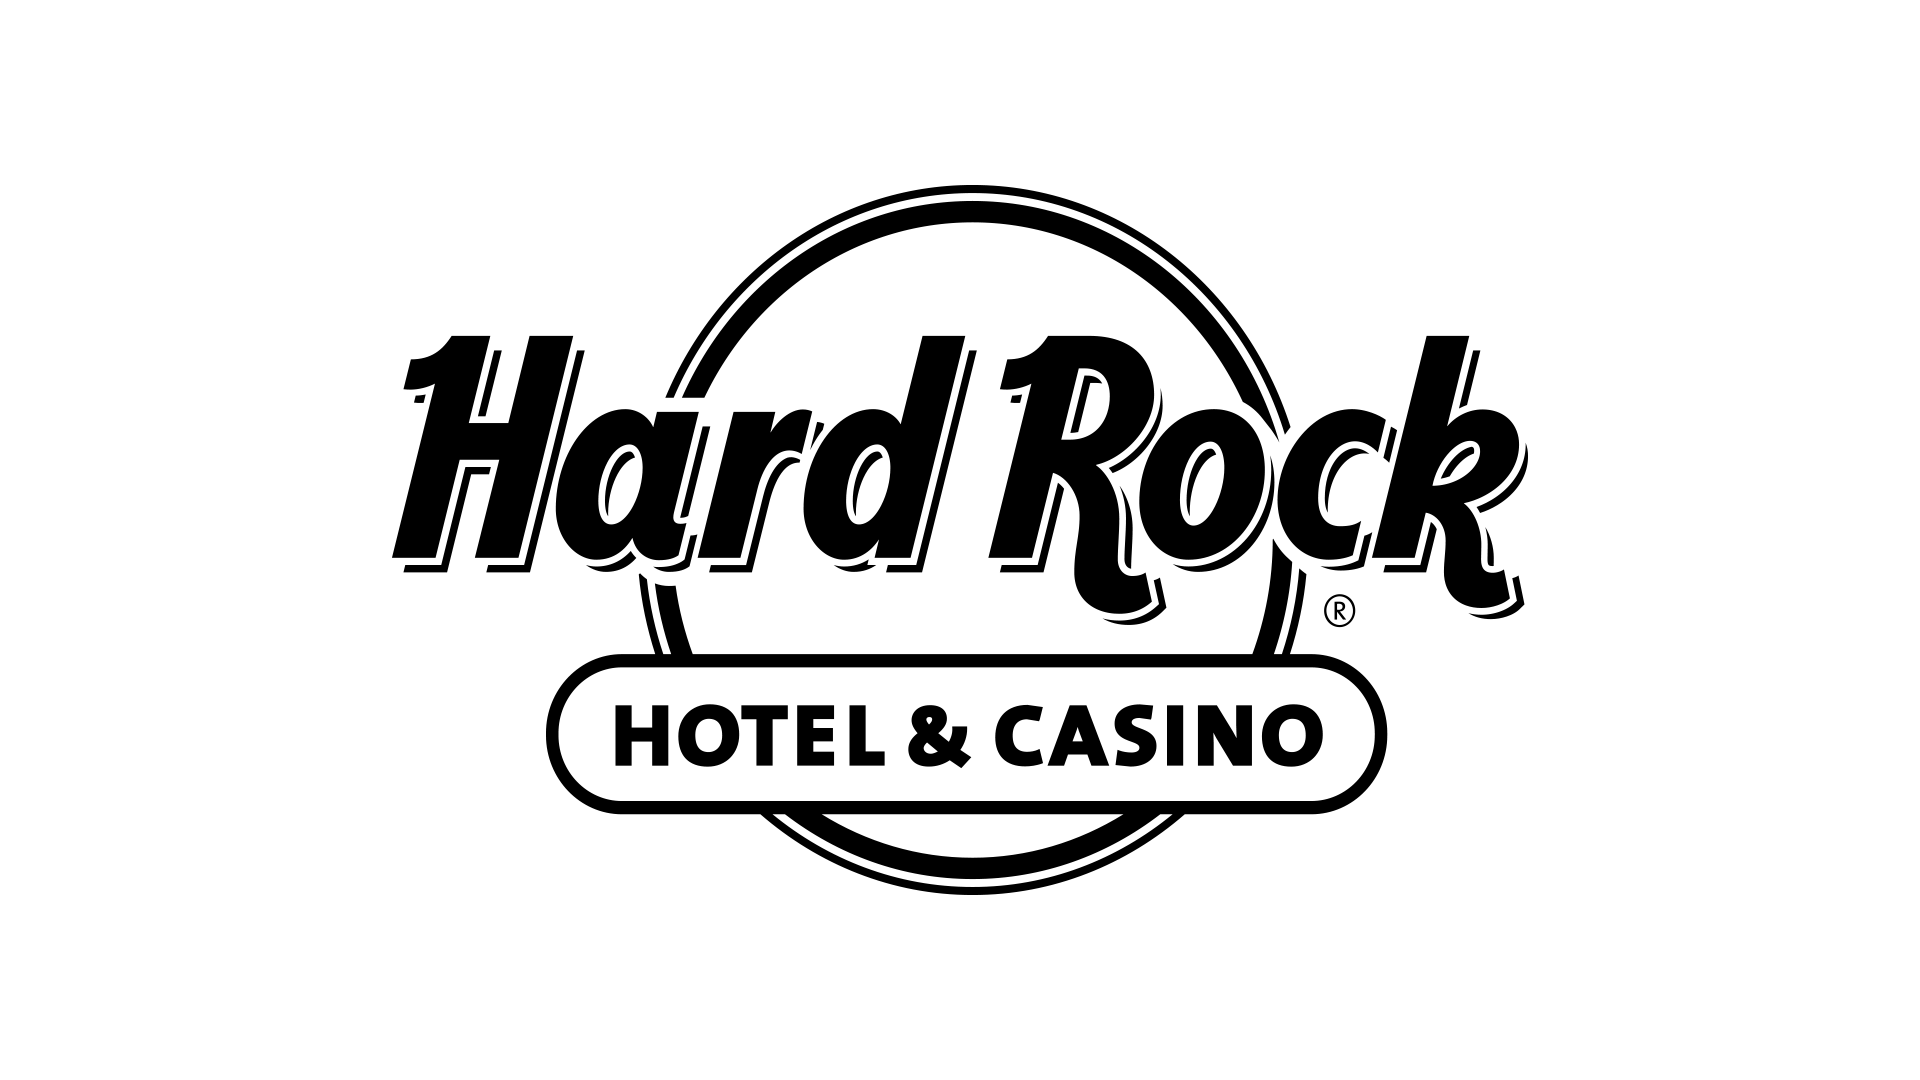 hard rock casino wheatland jobs